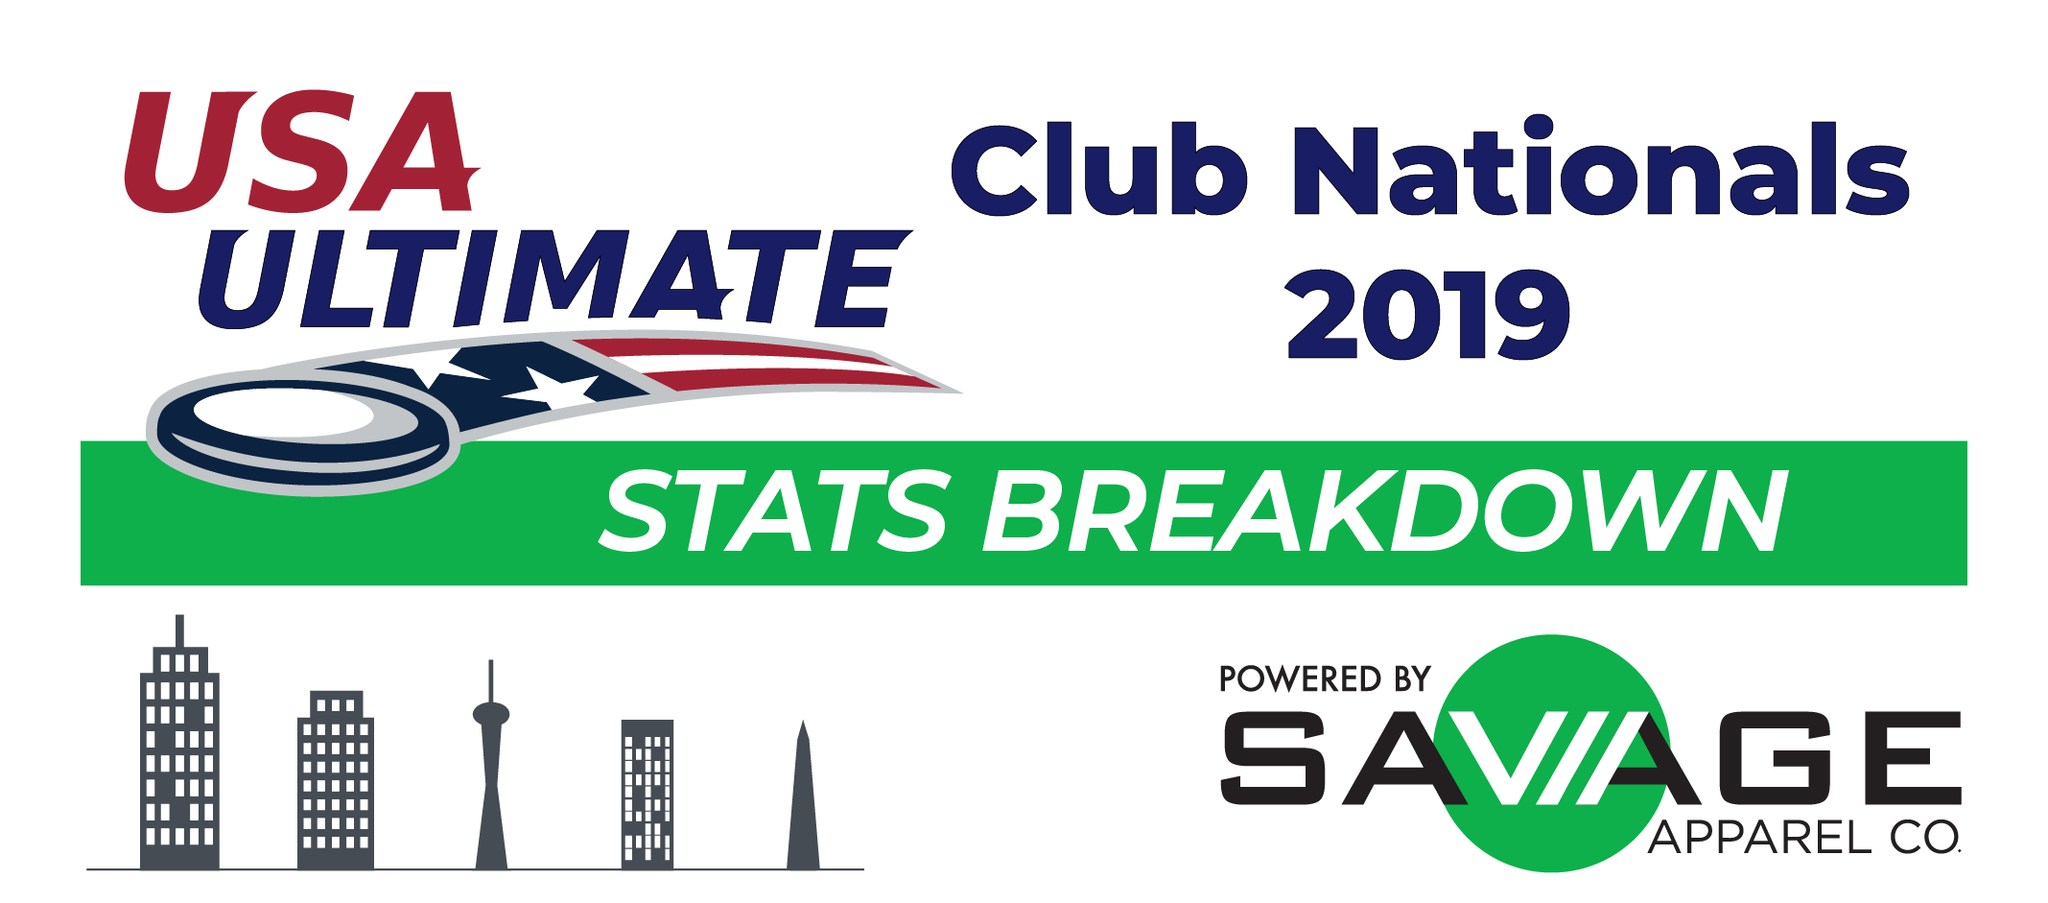 USAU Club Nationals 2019 Infographic VII Apparel Co.